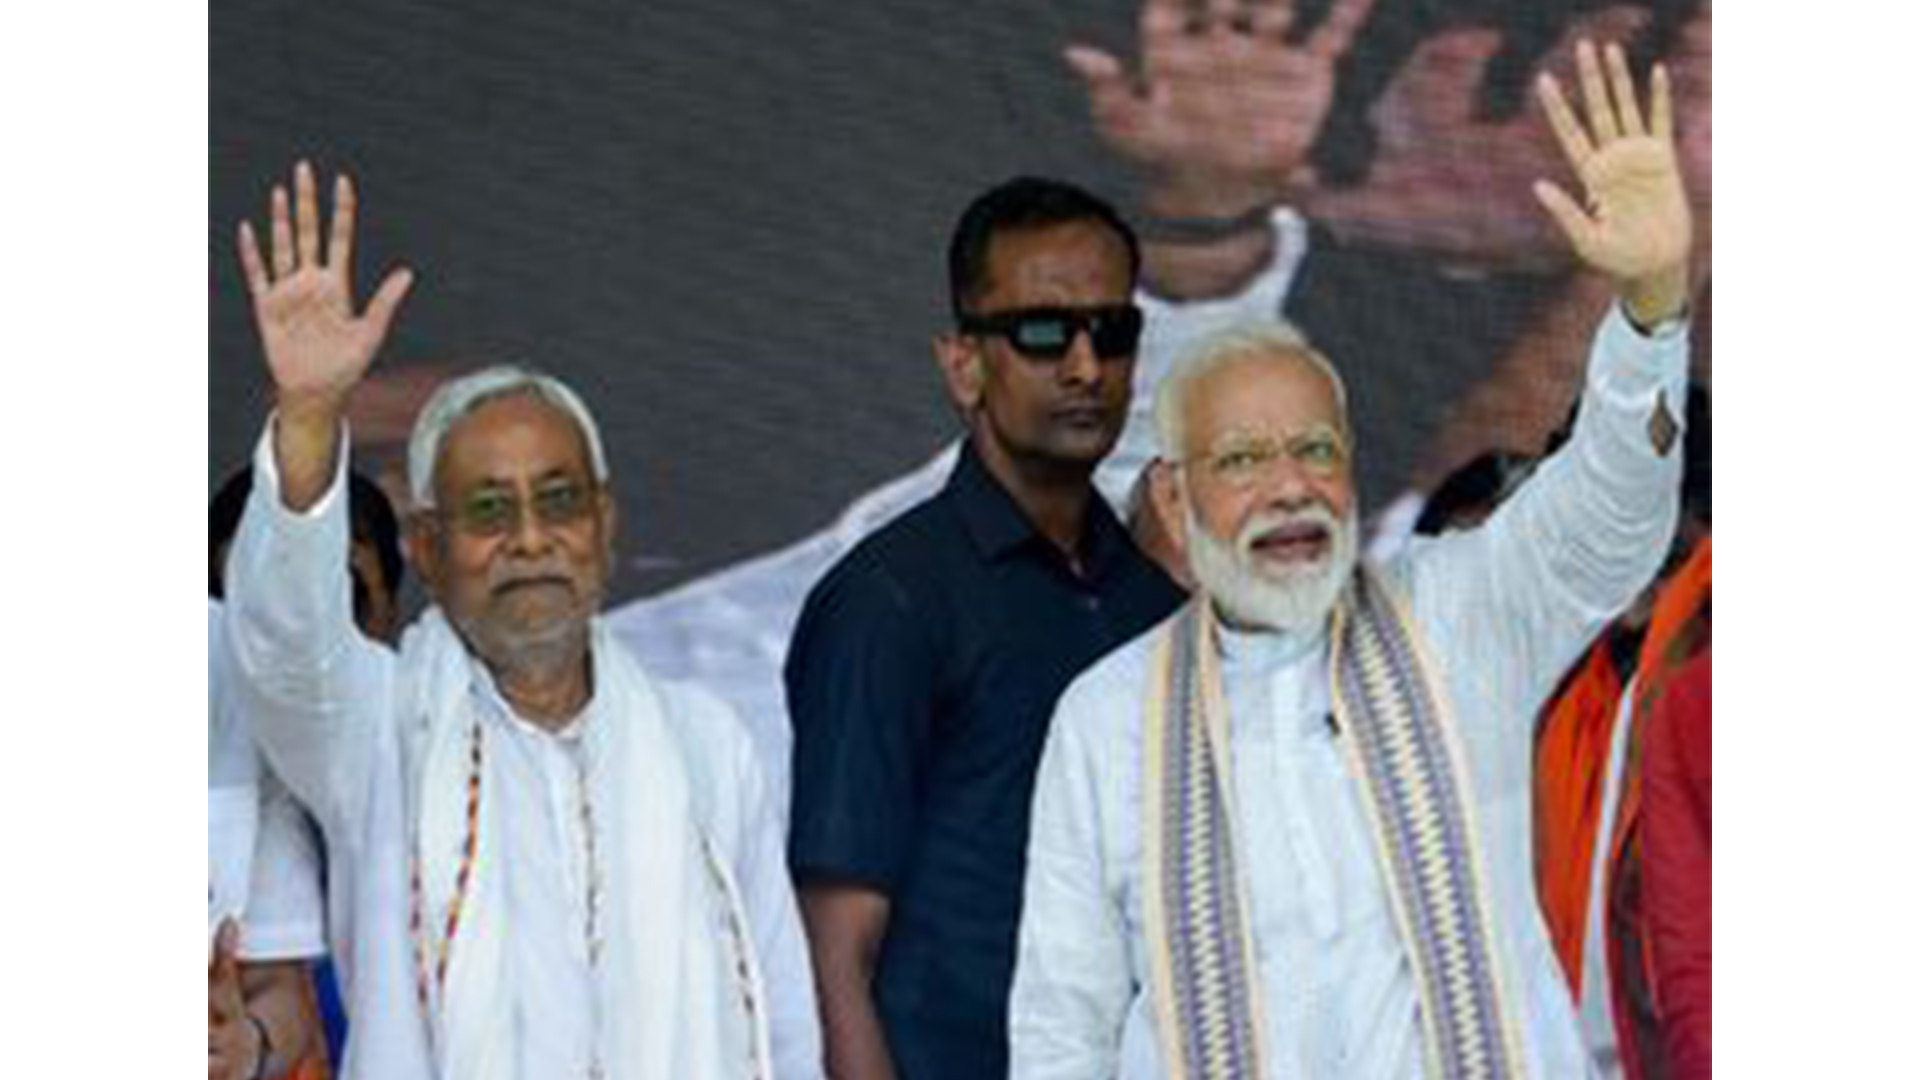 Bihar Elections: While Modi’s BJP performs well, Incumbent Nitish Kumar’s NDA alliance secures majority